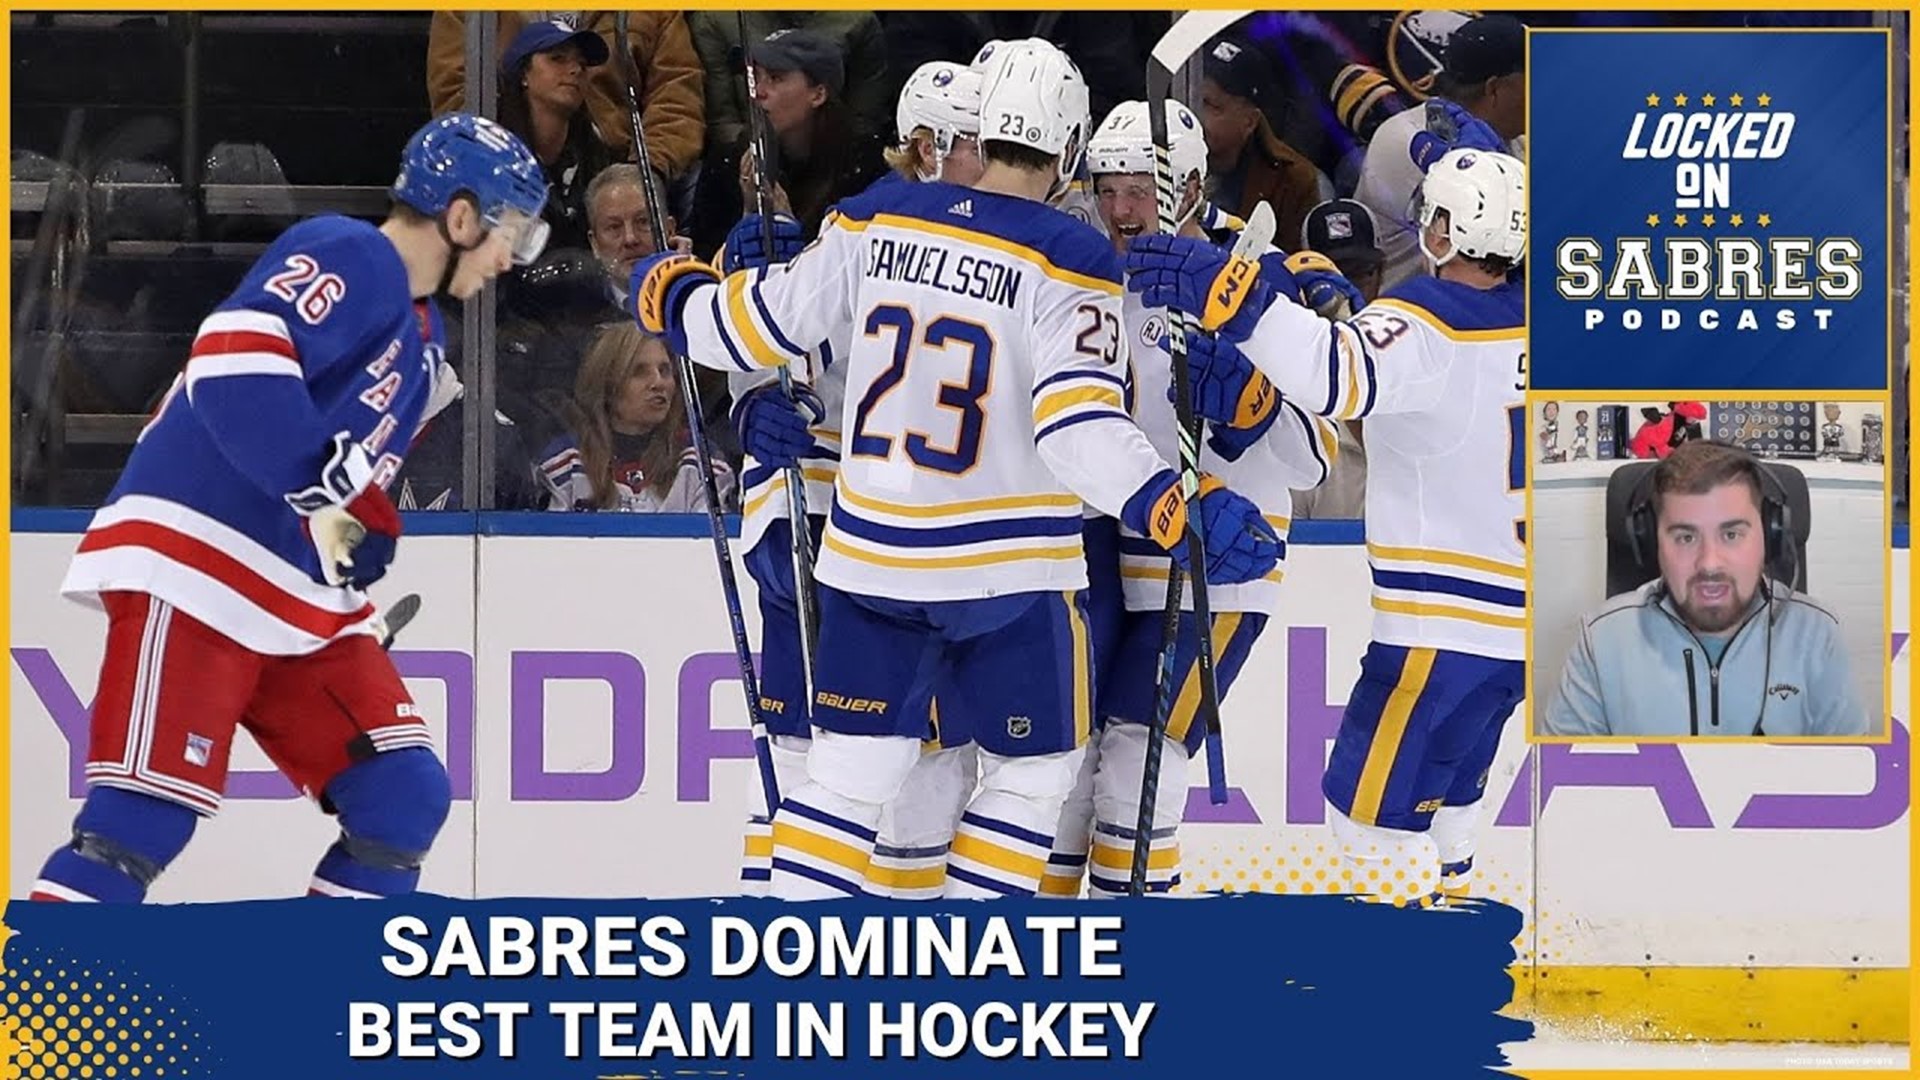 Sabres dominate the best team in hockey